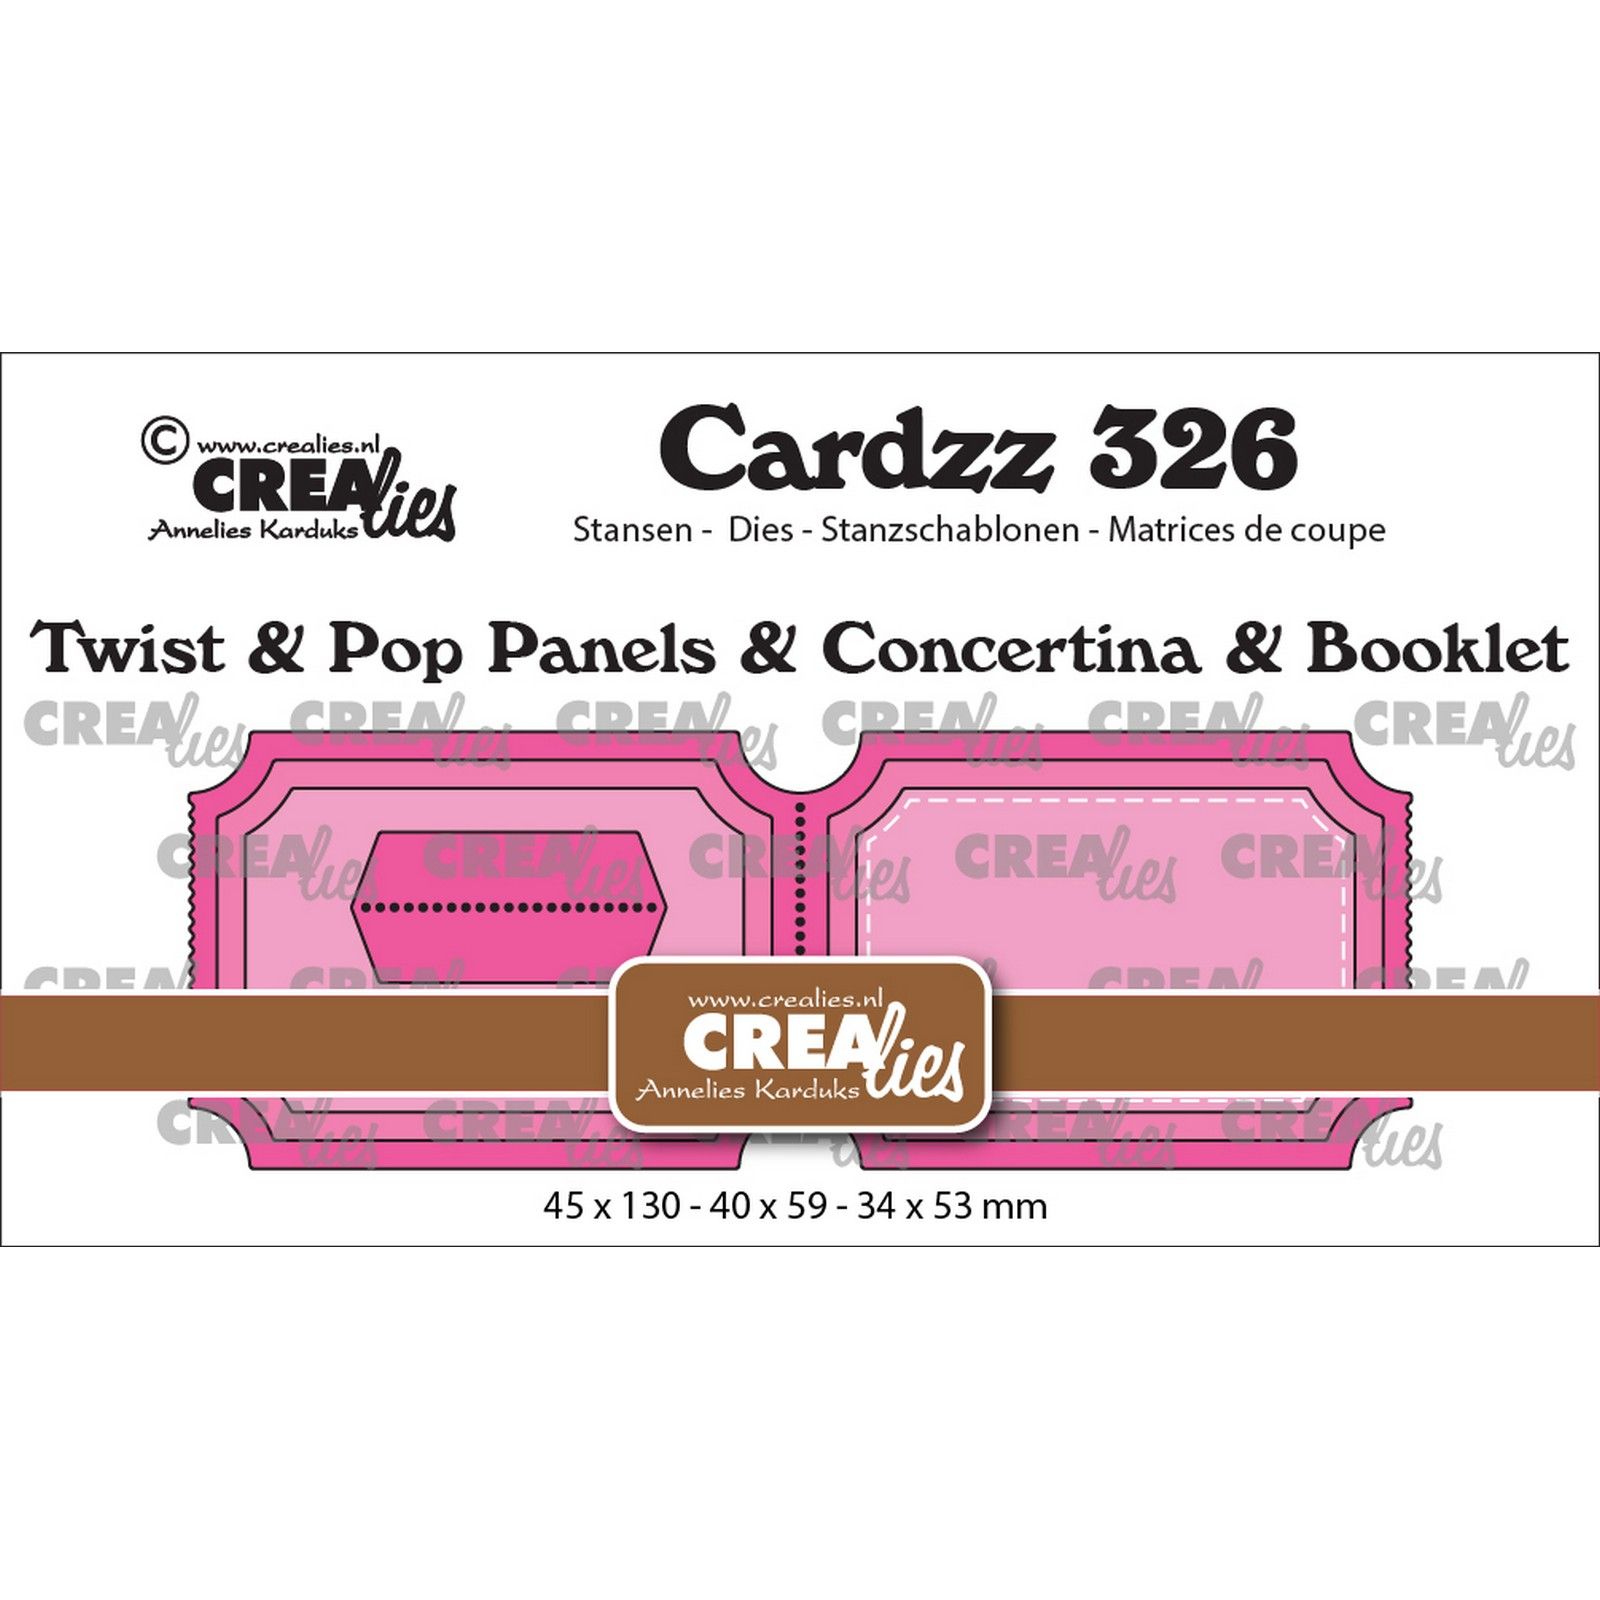 Crealies • Cardzz Twist & Pop A3, Panels & Concertina & Booklet Tickets Horizontal